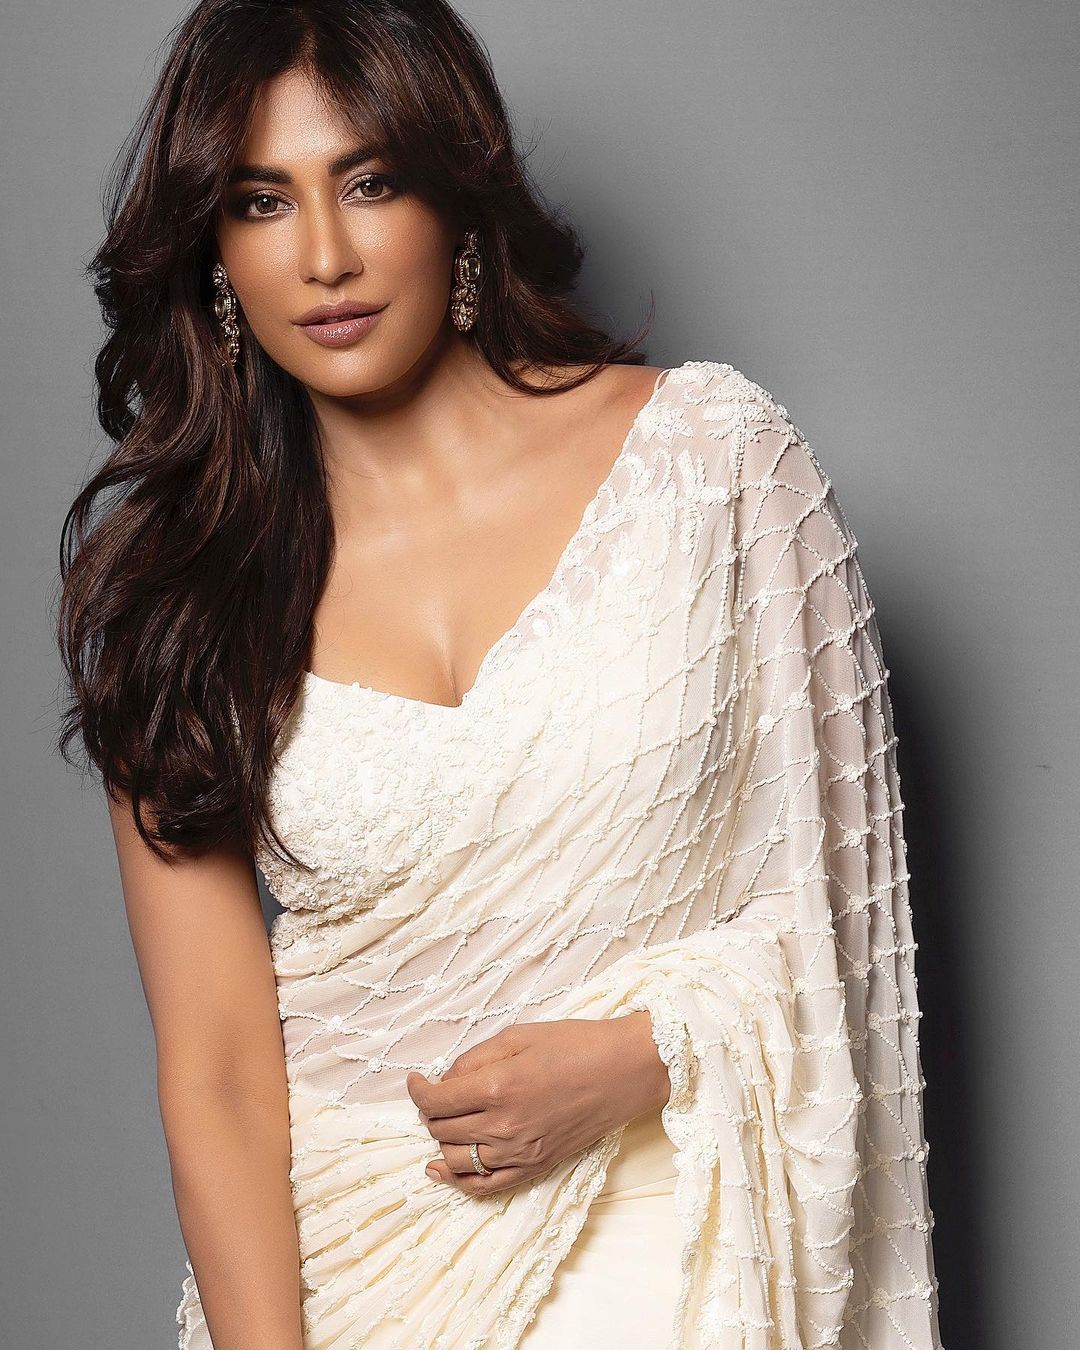 Chitrangada Singh white saree cleavage